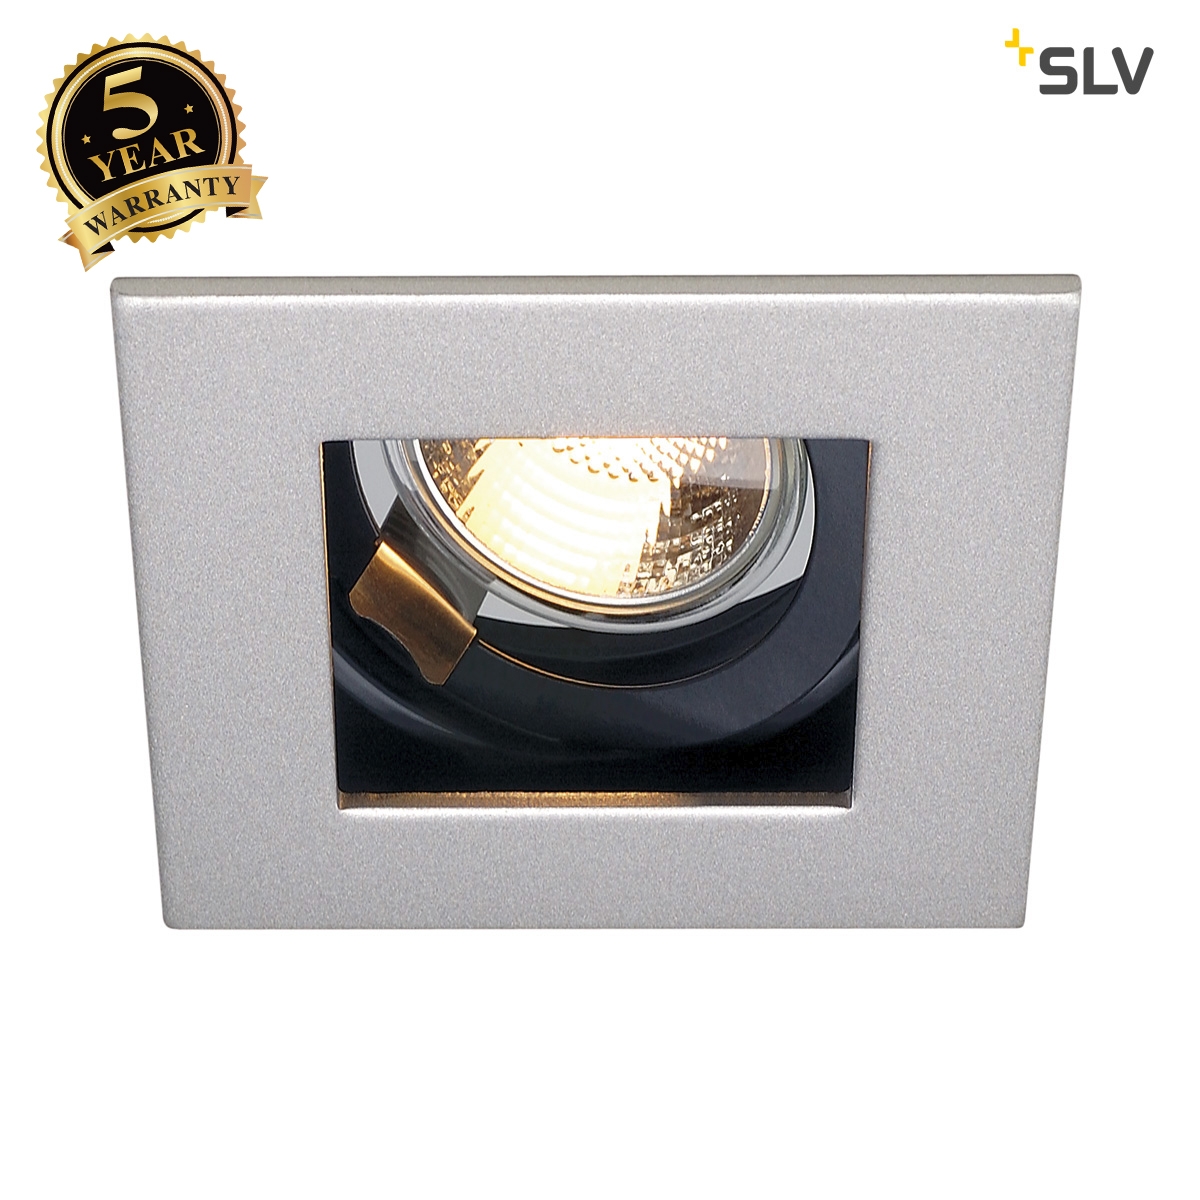 SLV INDI REC 1S downlight, square, silver-grey/black, GU10, max. 50W, adjustable 112474